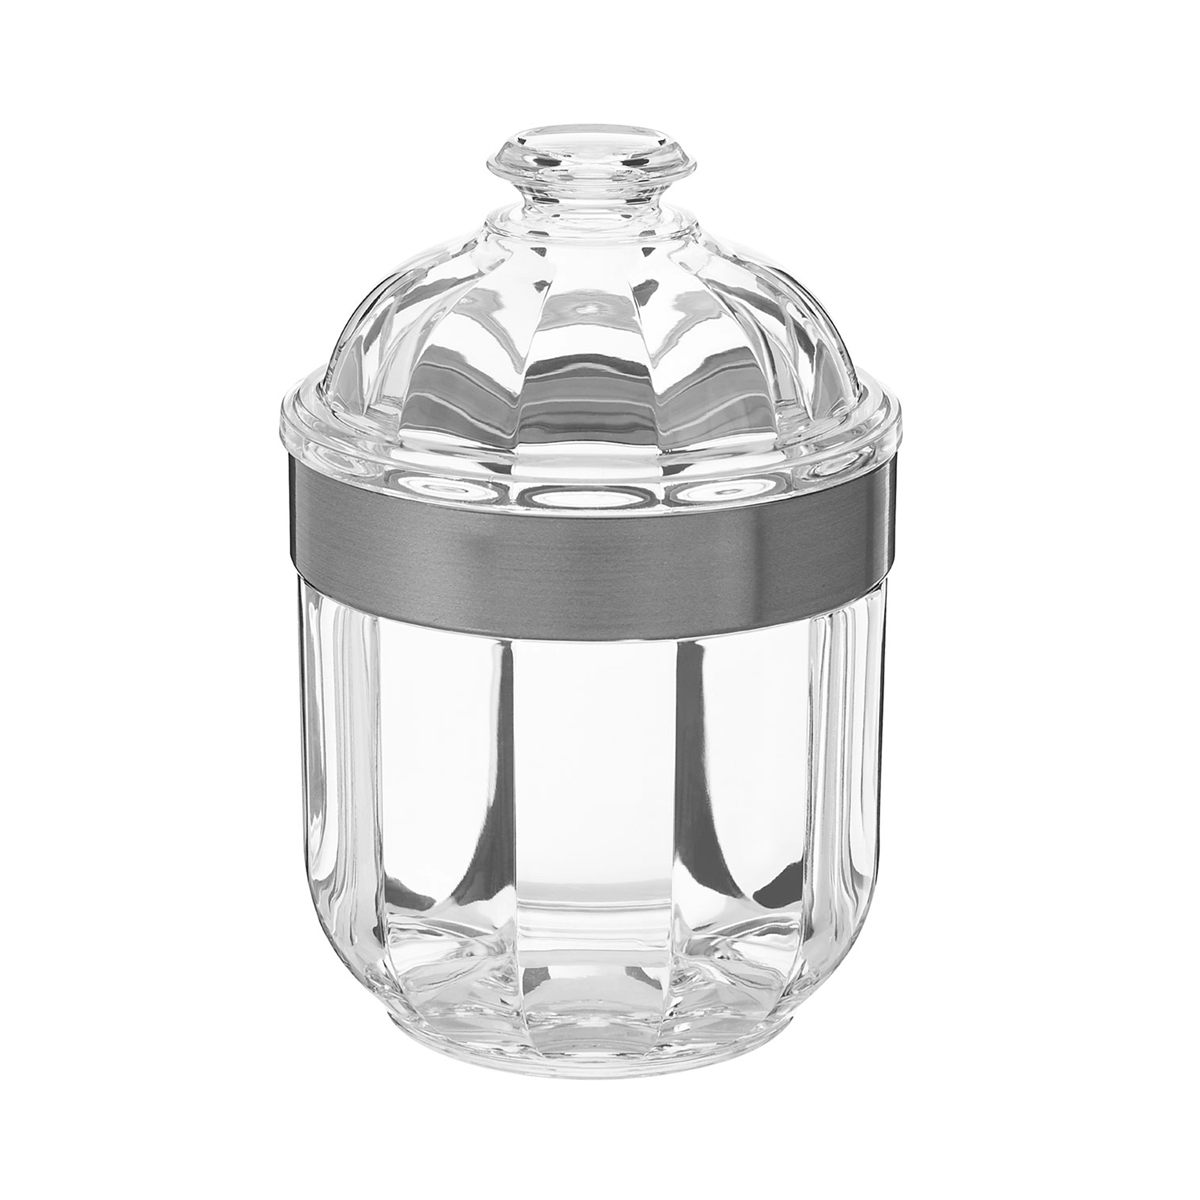 Accents Silver small acrylic storage jar